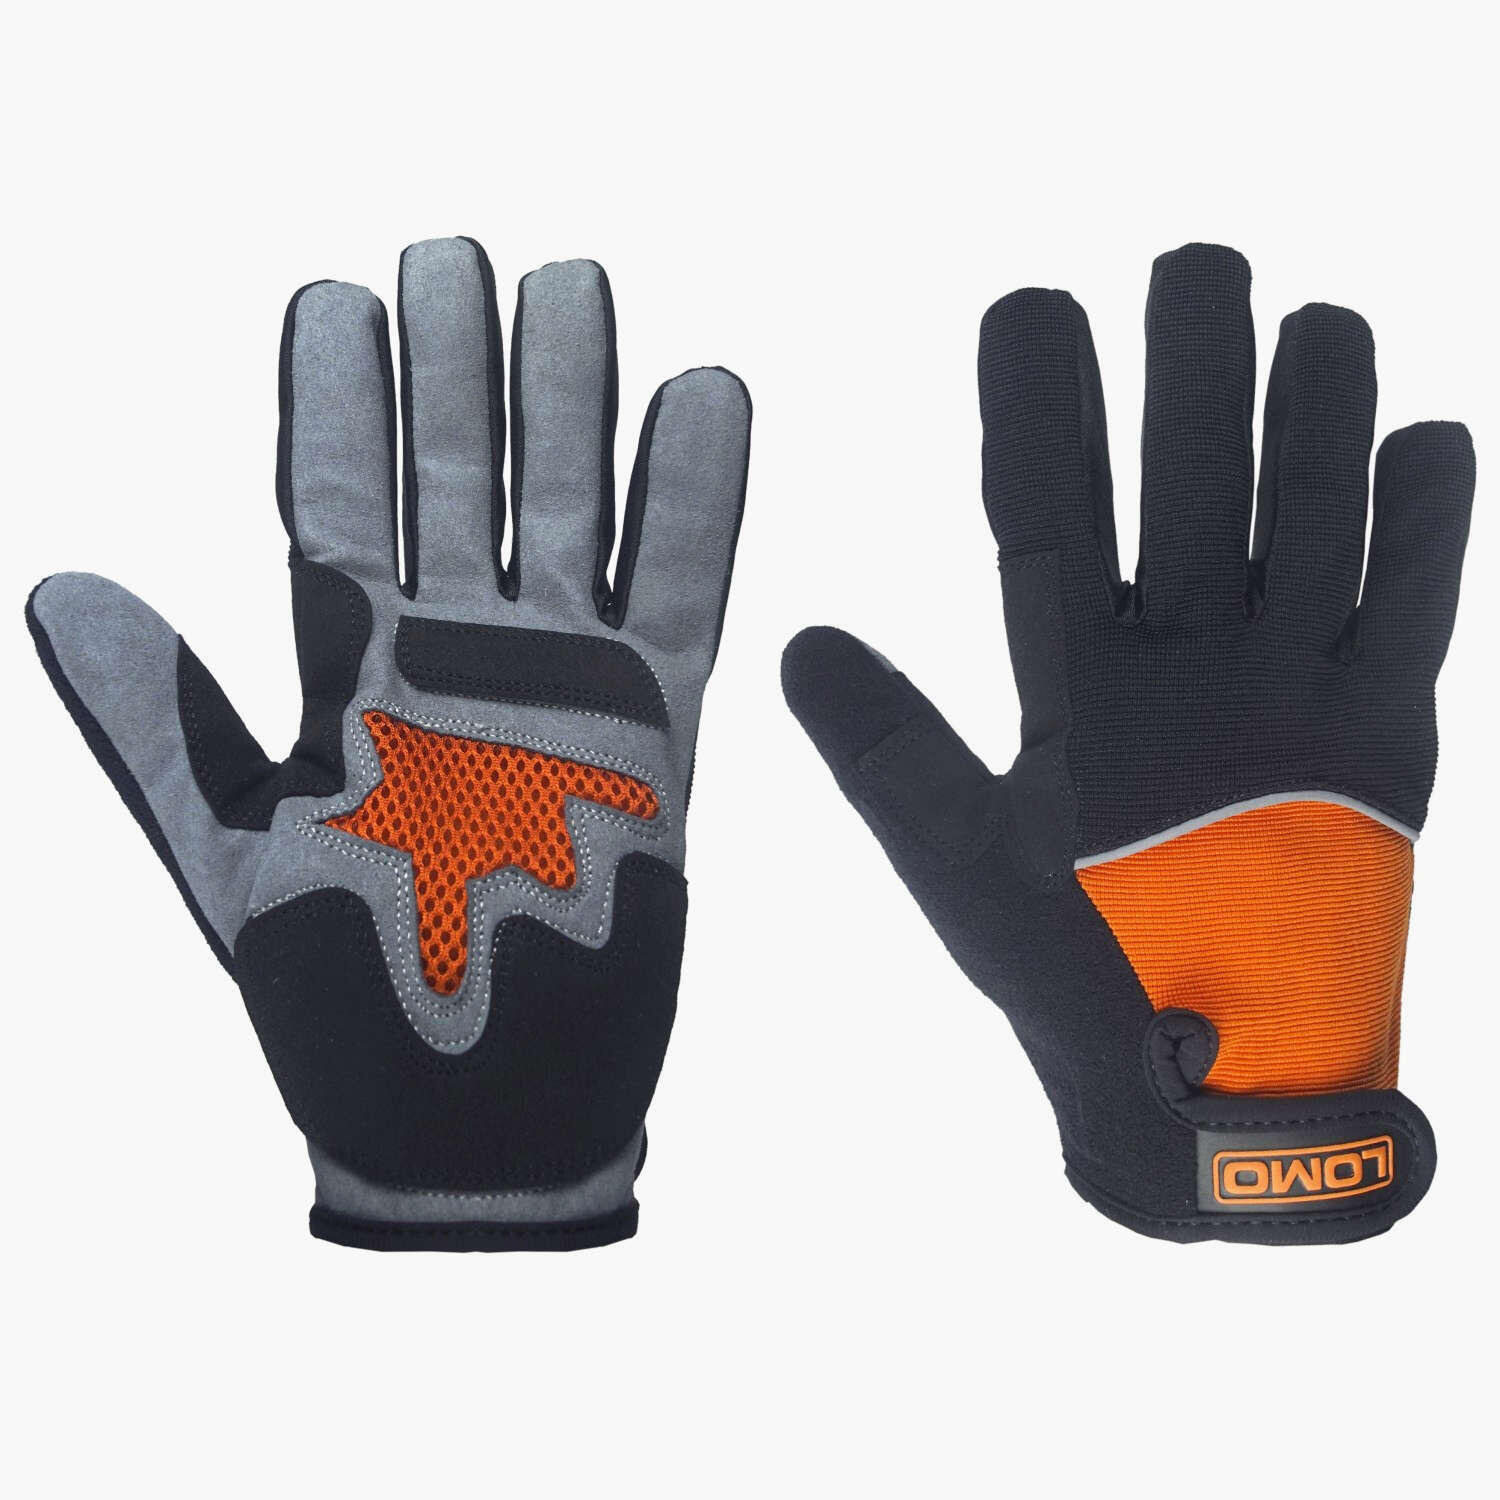 Lomo Mountain Bike Gloves - Black / Grey / Orange 5/8